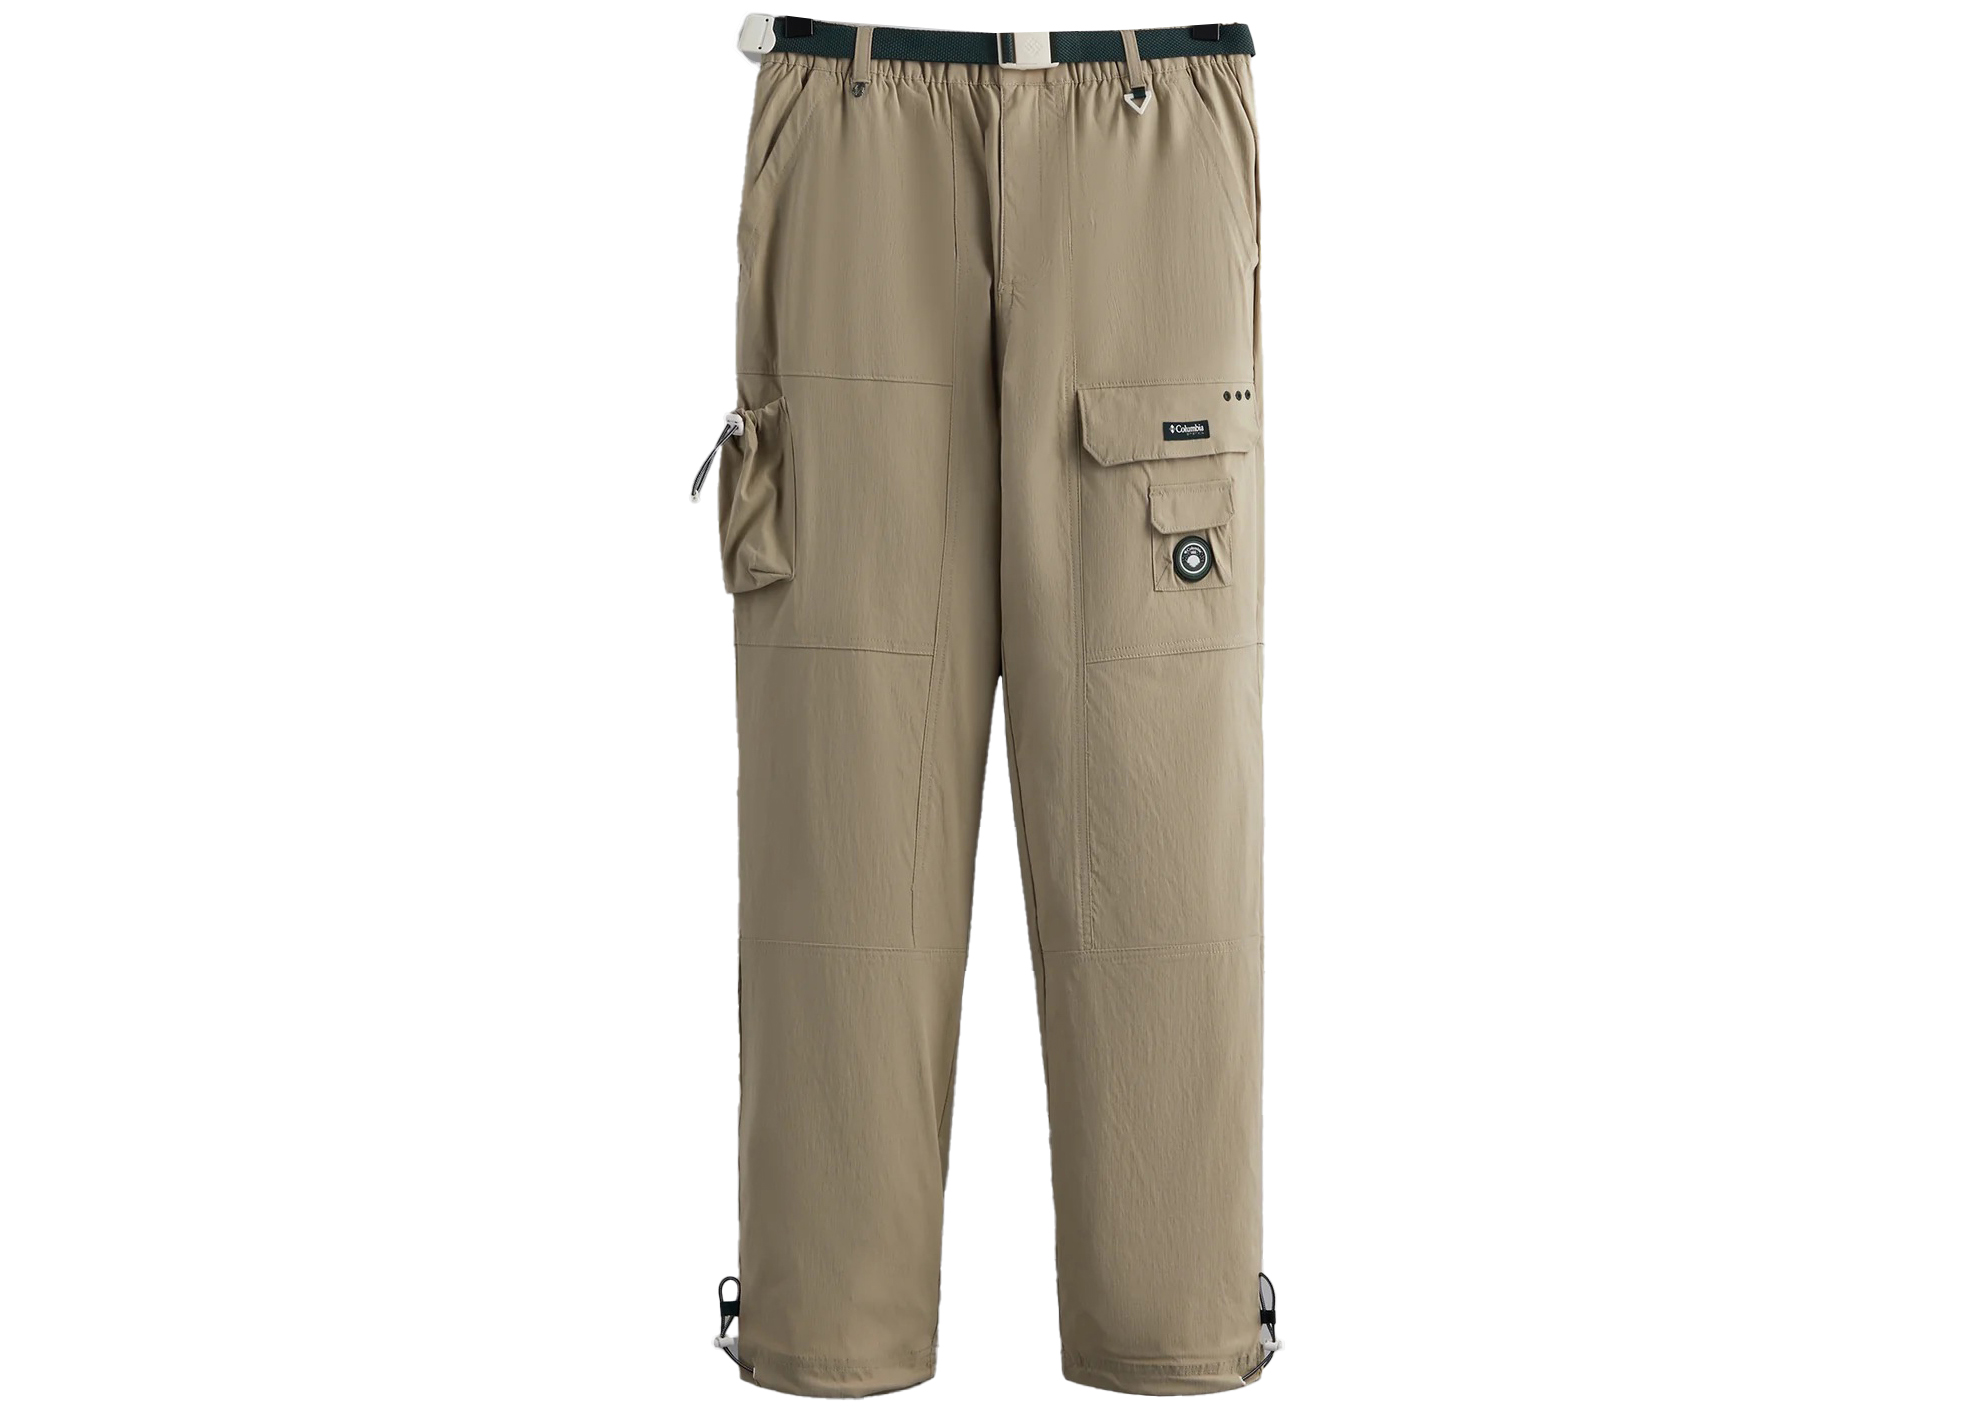 Buy Mens Activewear Pants Online at Columbia Sportswear